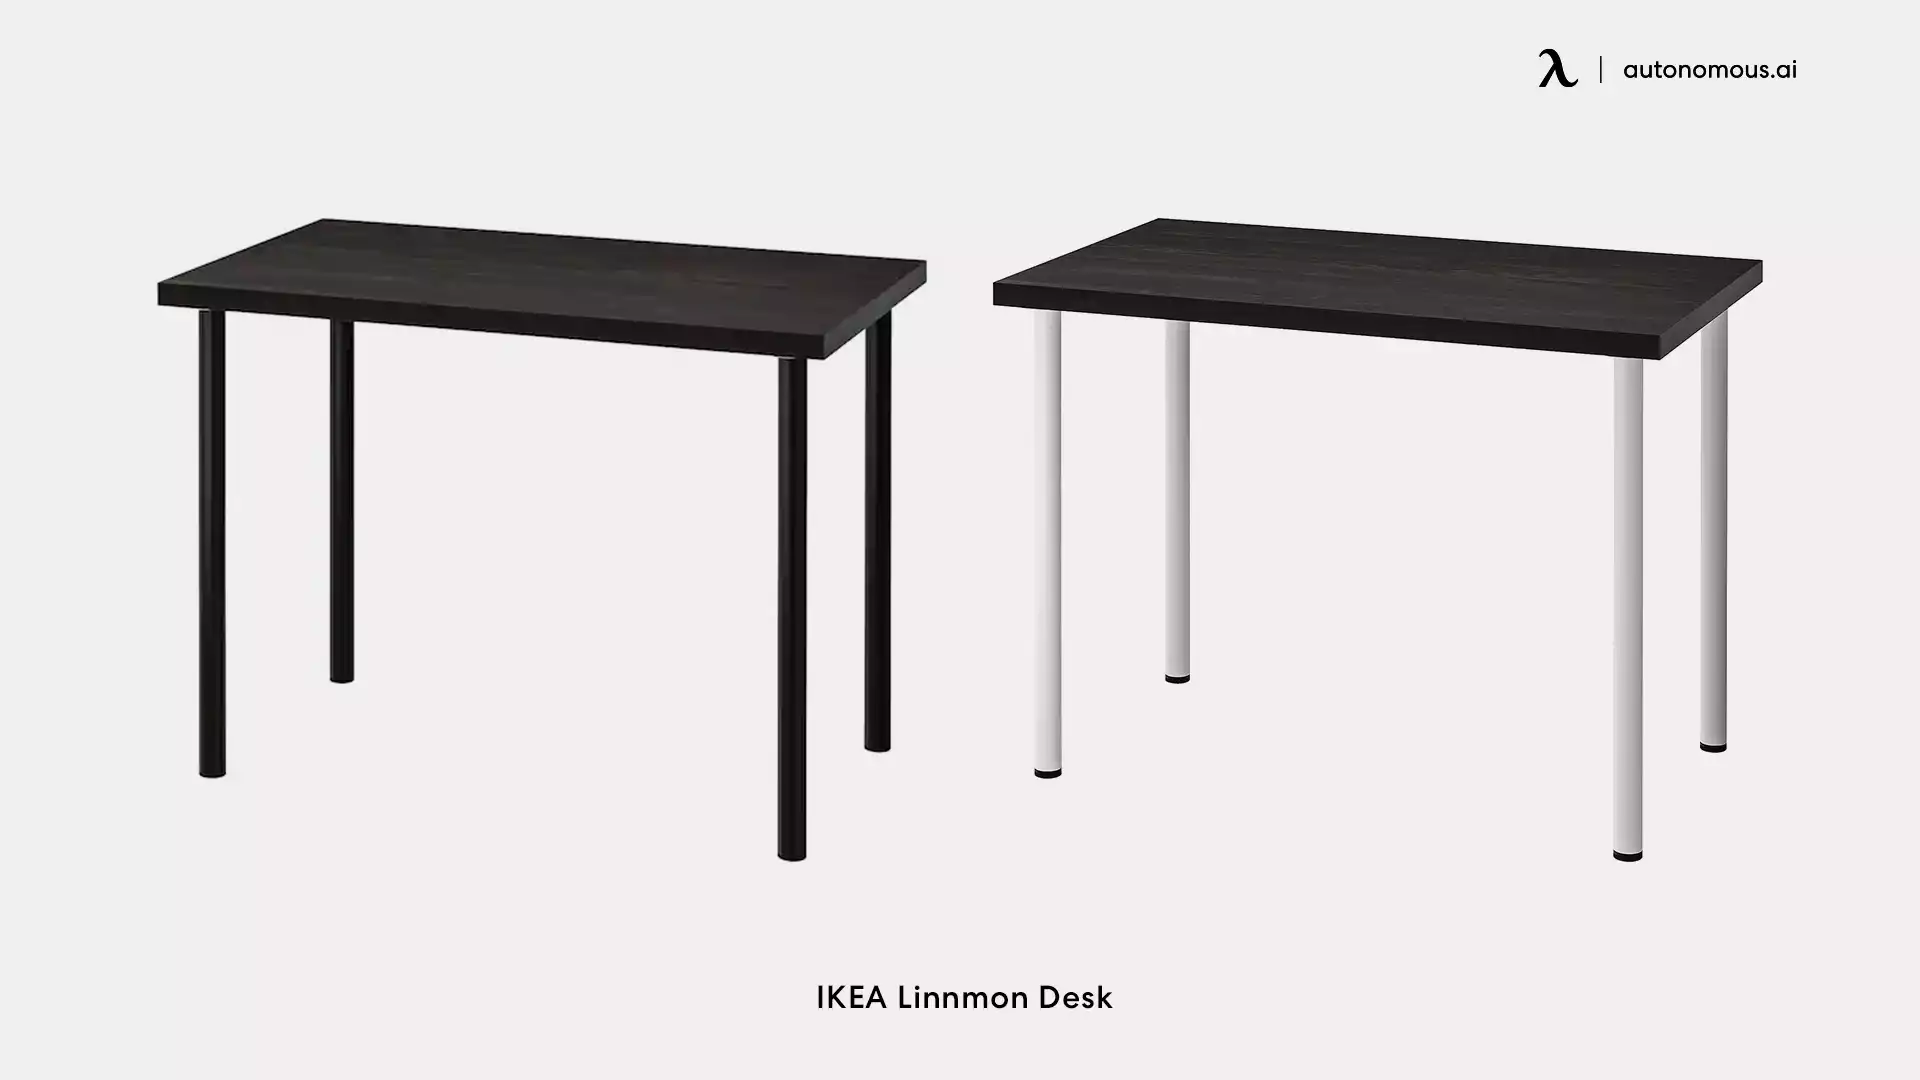 IKEA's Linnmon or Alex